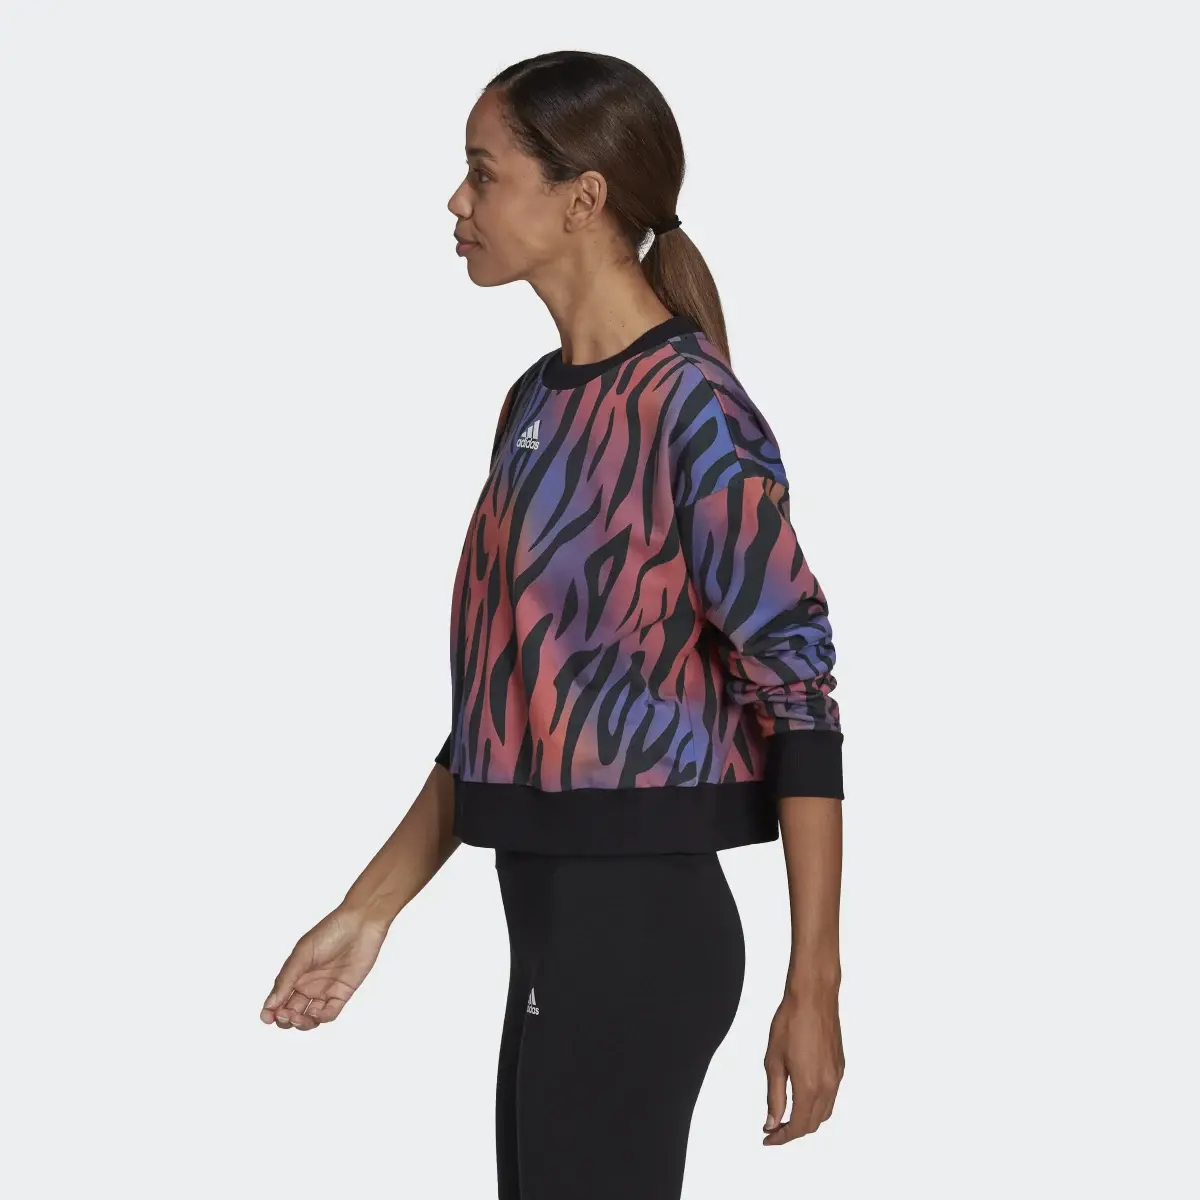 Adidas Tiger-Print Sweatshirt. 3